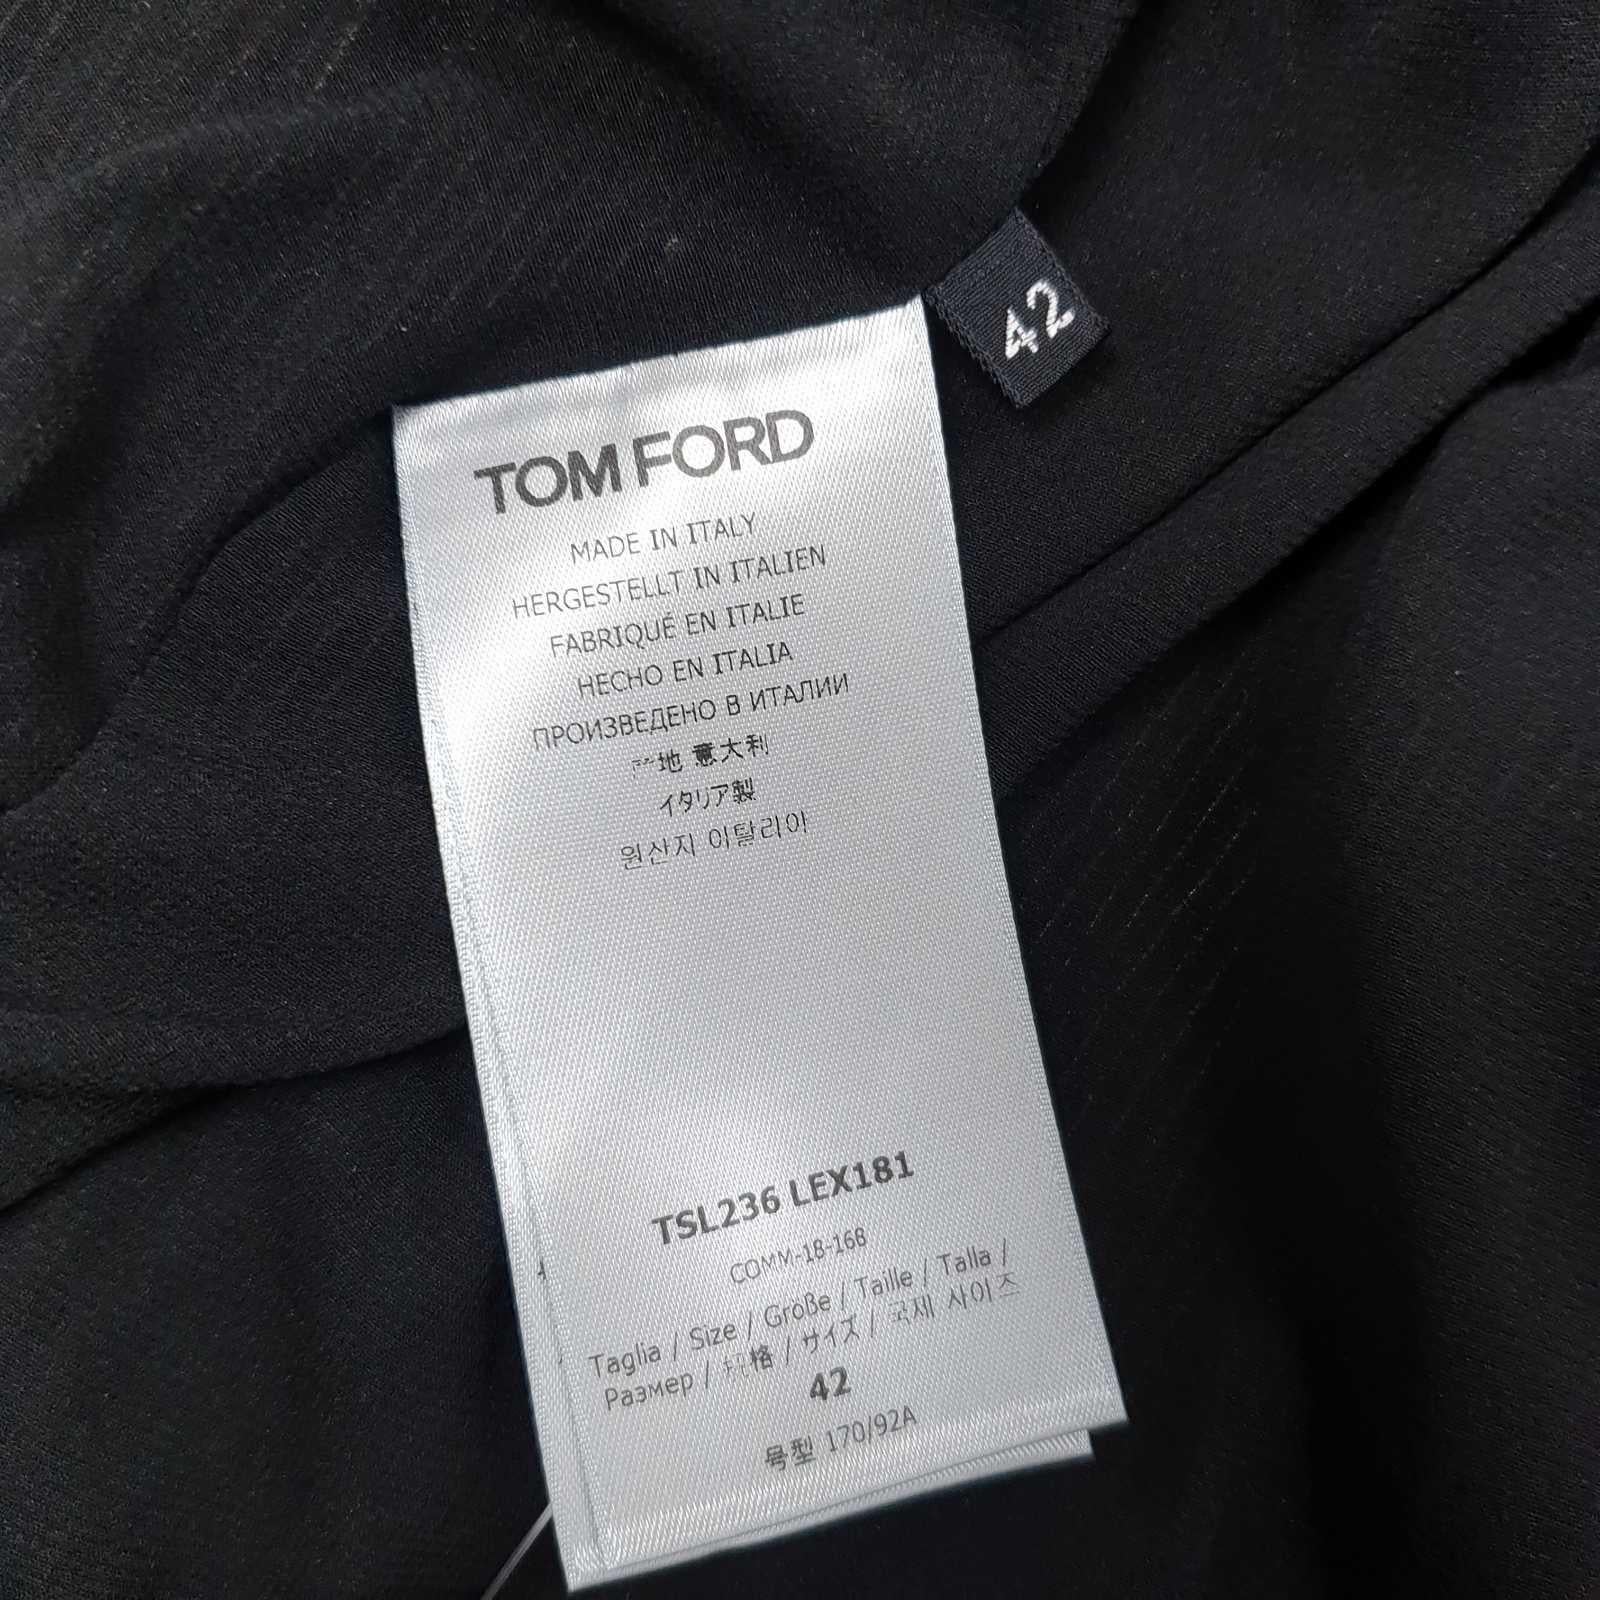 Tom Ford Black Leather Jacket Skirt Suit For Sale 4